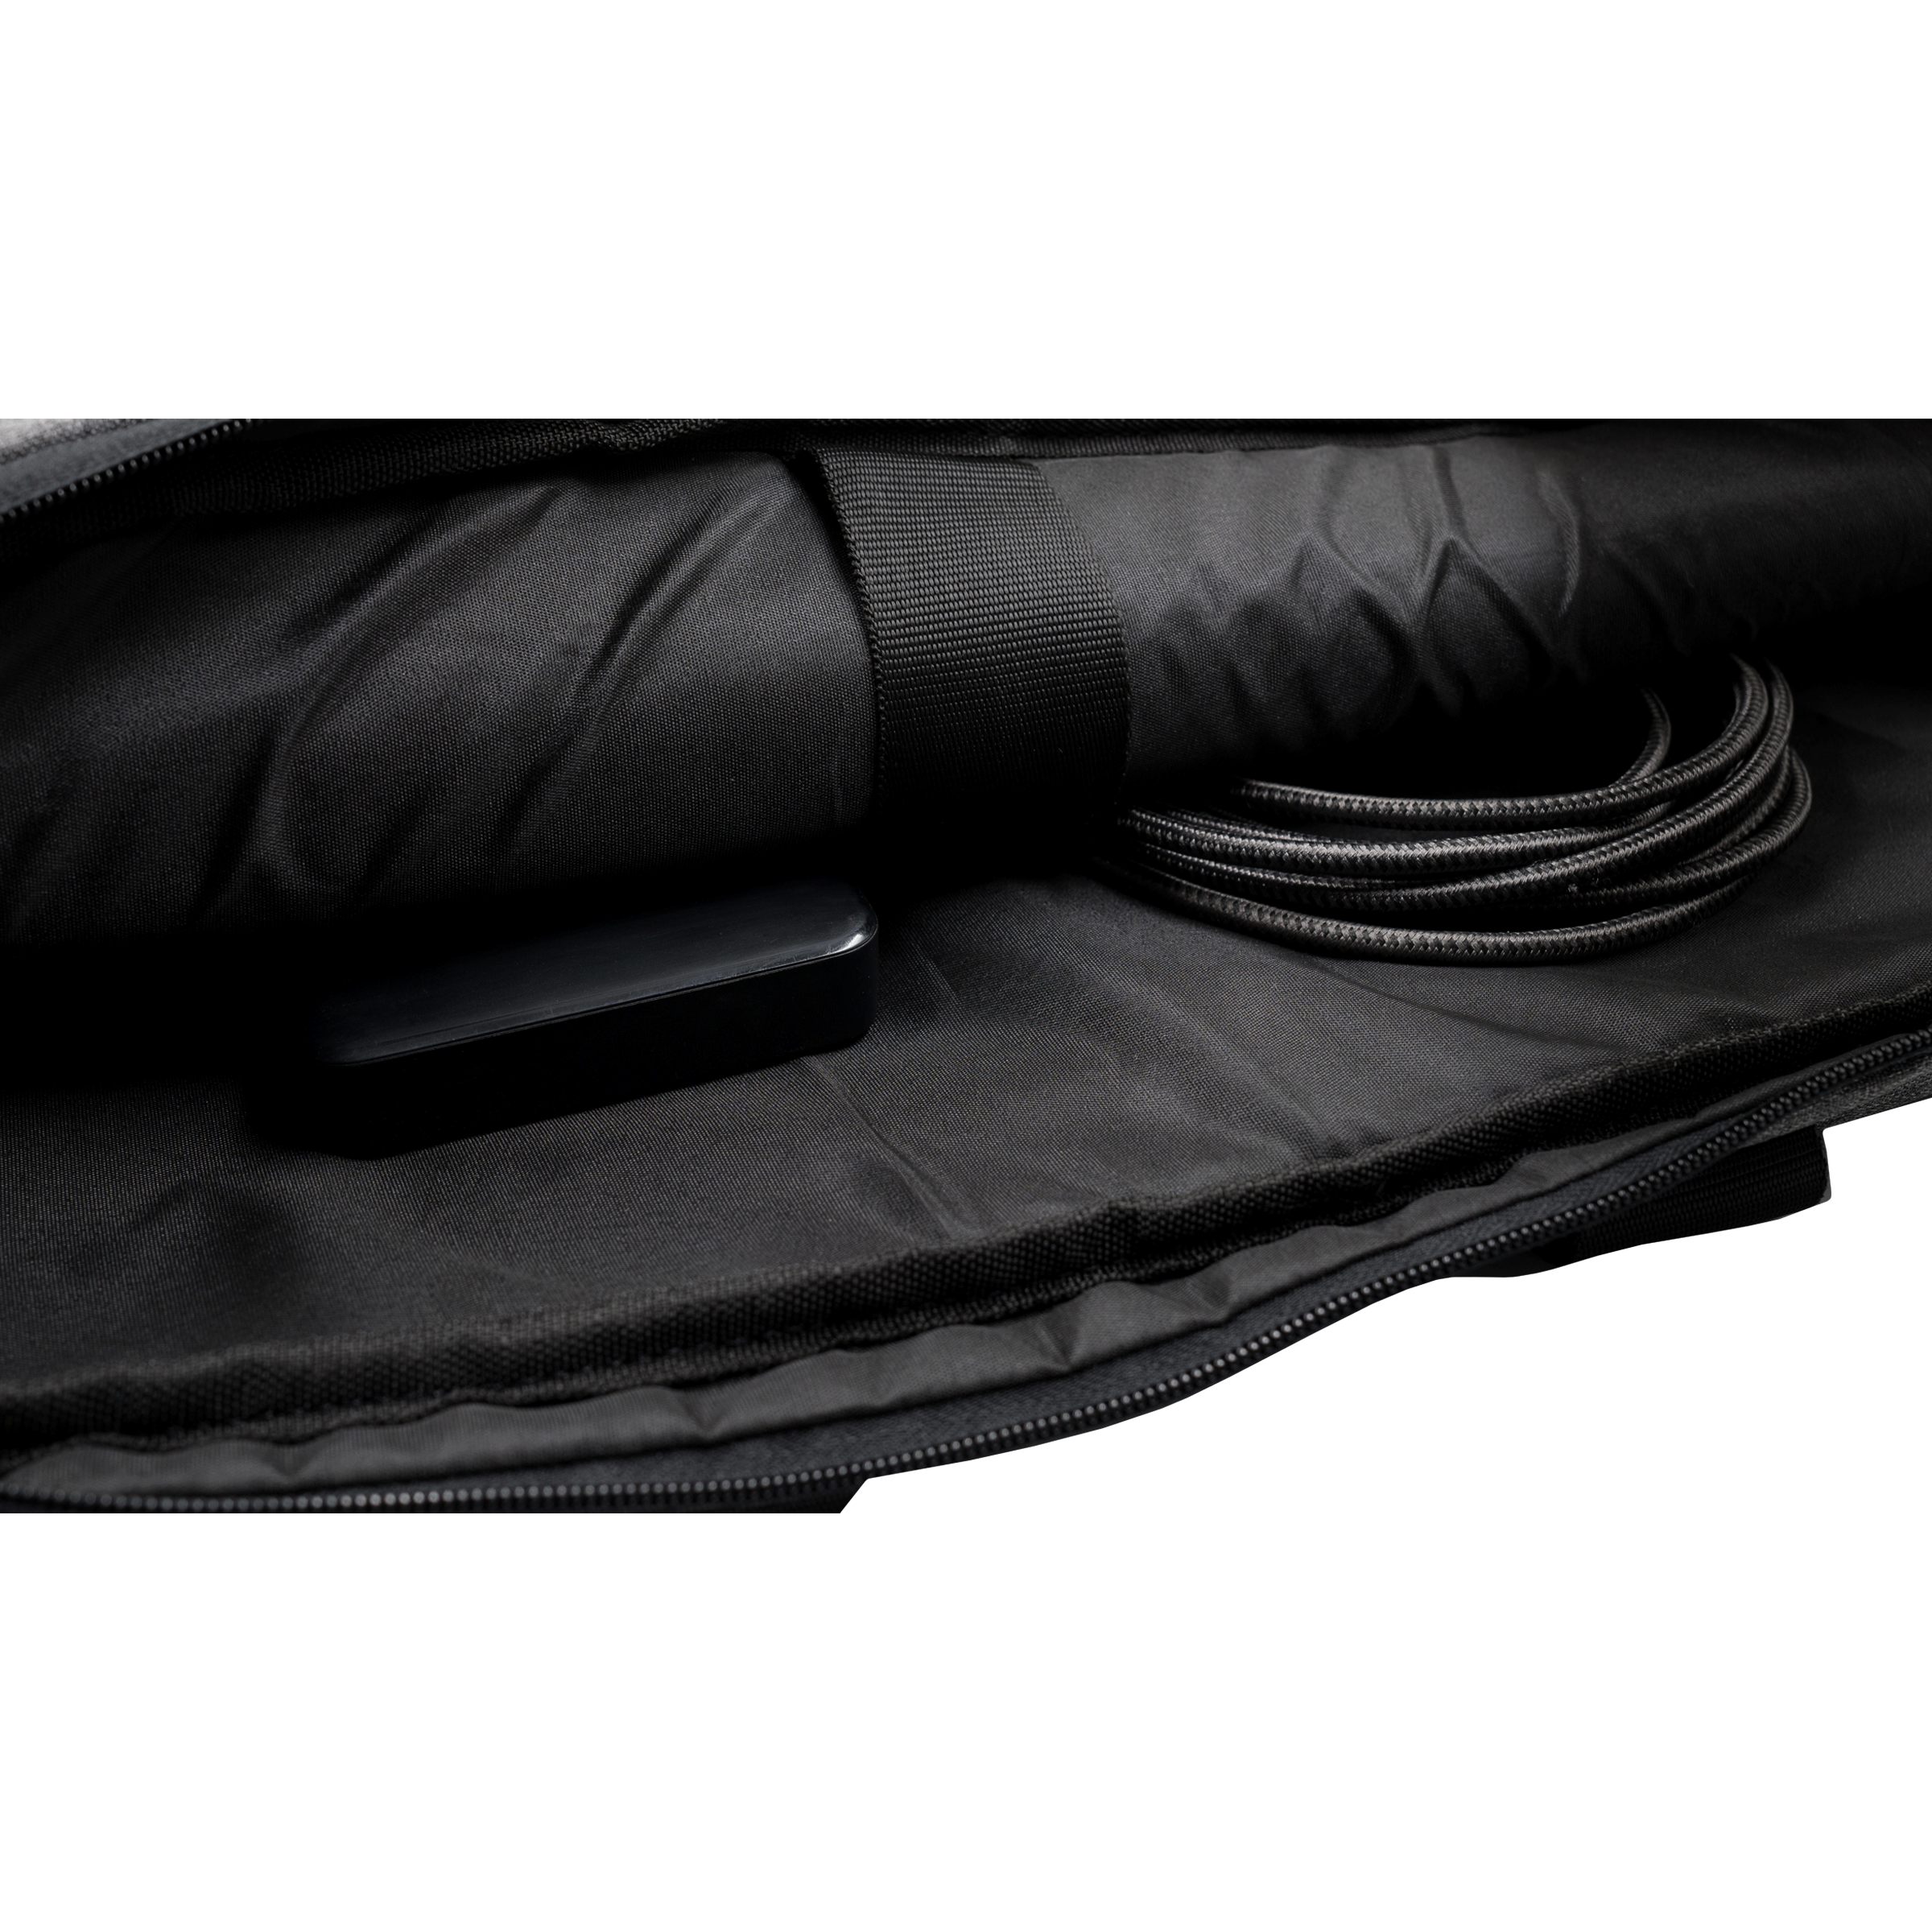 Buy Stuffcool Lush Faux Leather Laptop Sling Bag for 14 Inch Laptop  (Detachable & Adjustable Shoulder Strap, Black) Online Croma